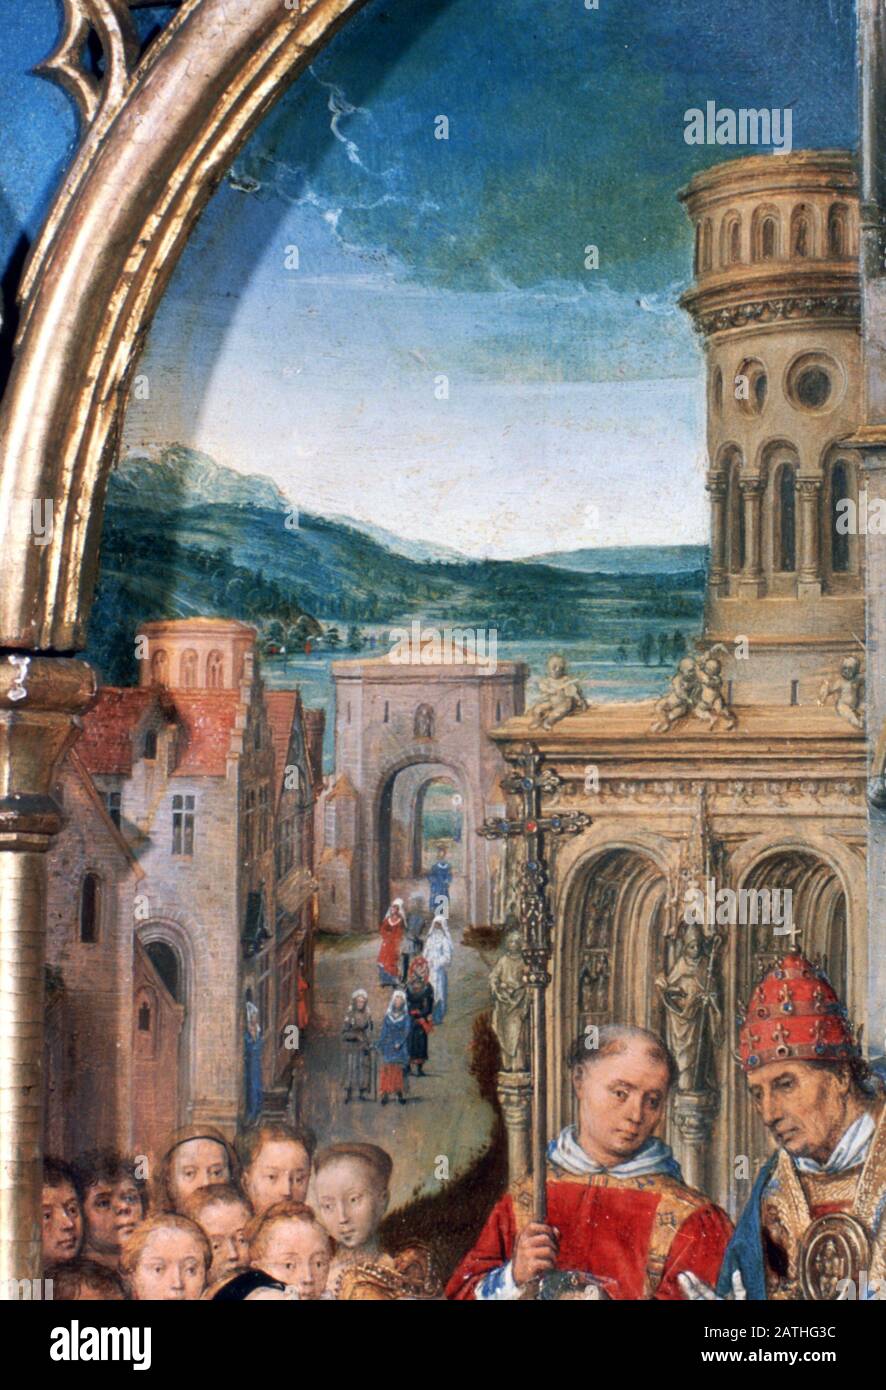 Santuario De San Ursula, Llegada A Roma', Detalle, 1489. El Reliquario De St Ursula, Museo Memling, Sint-Janshospitaal, Brujas. Foto de stock